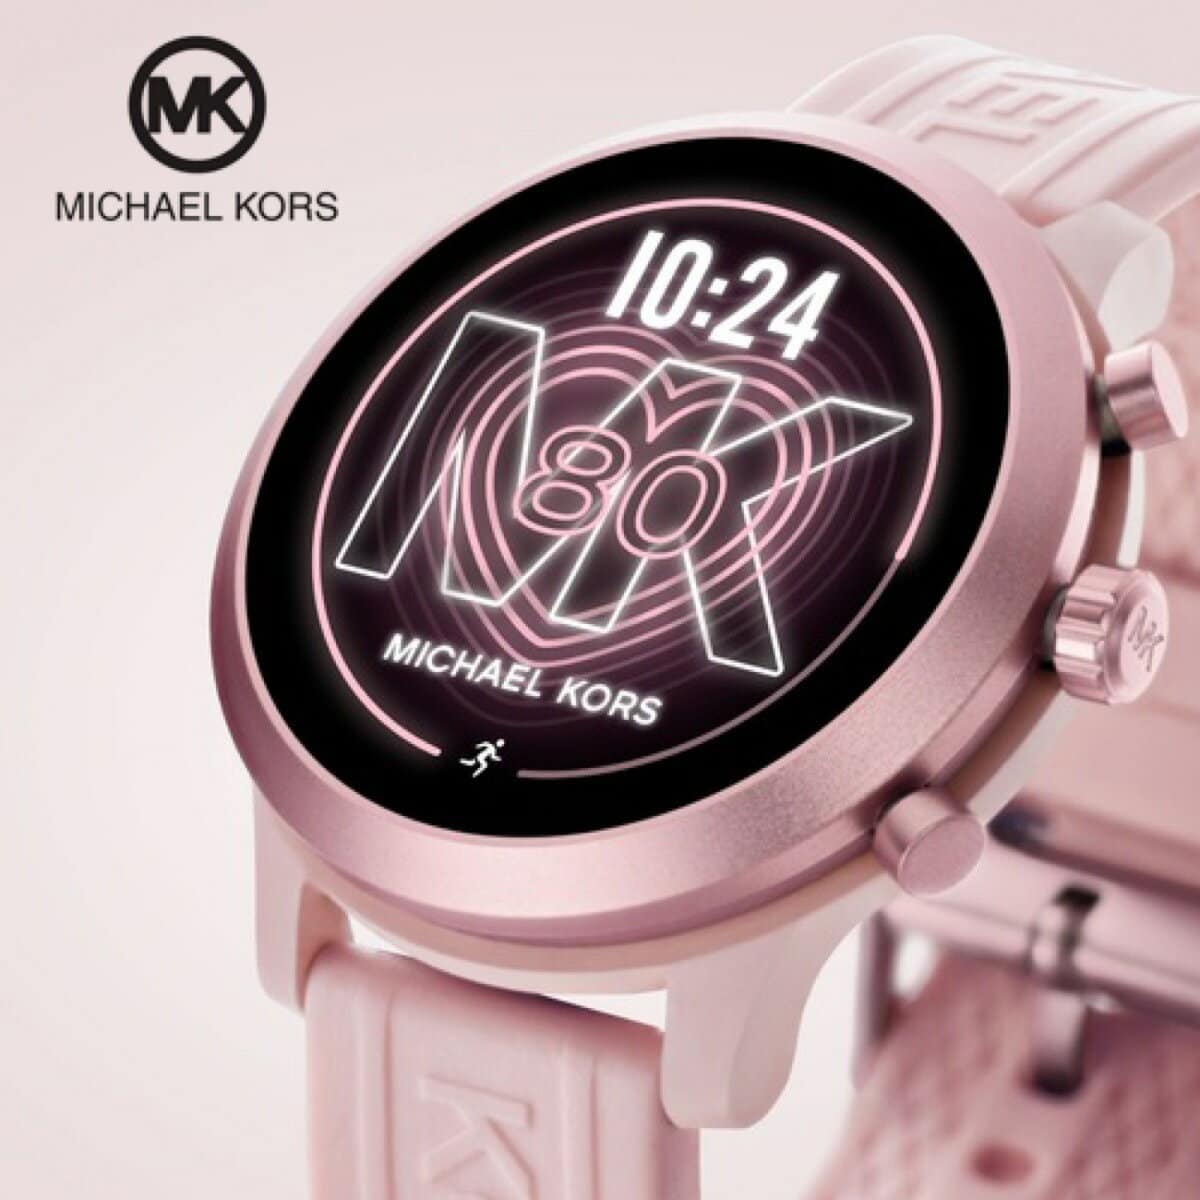 Smartwatch Mkt5070 Top Sellers - www.edoc.com.vn 1695737614